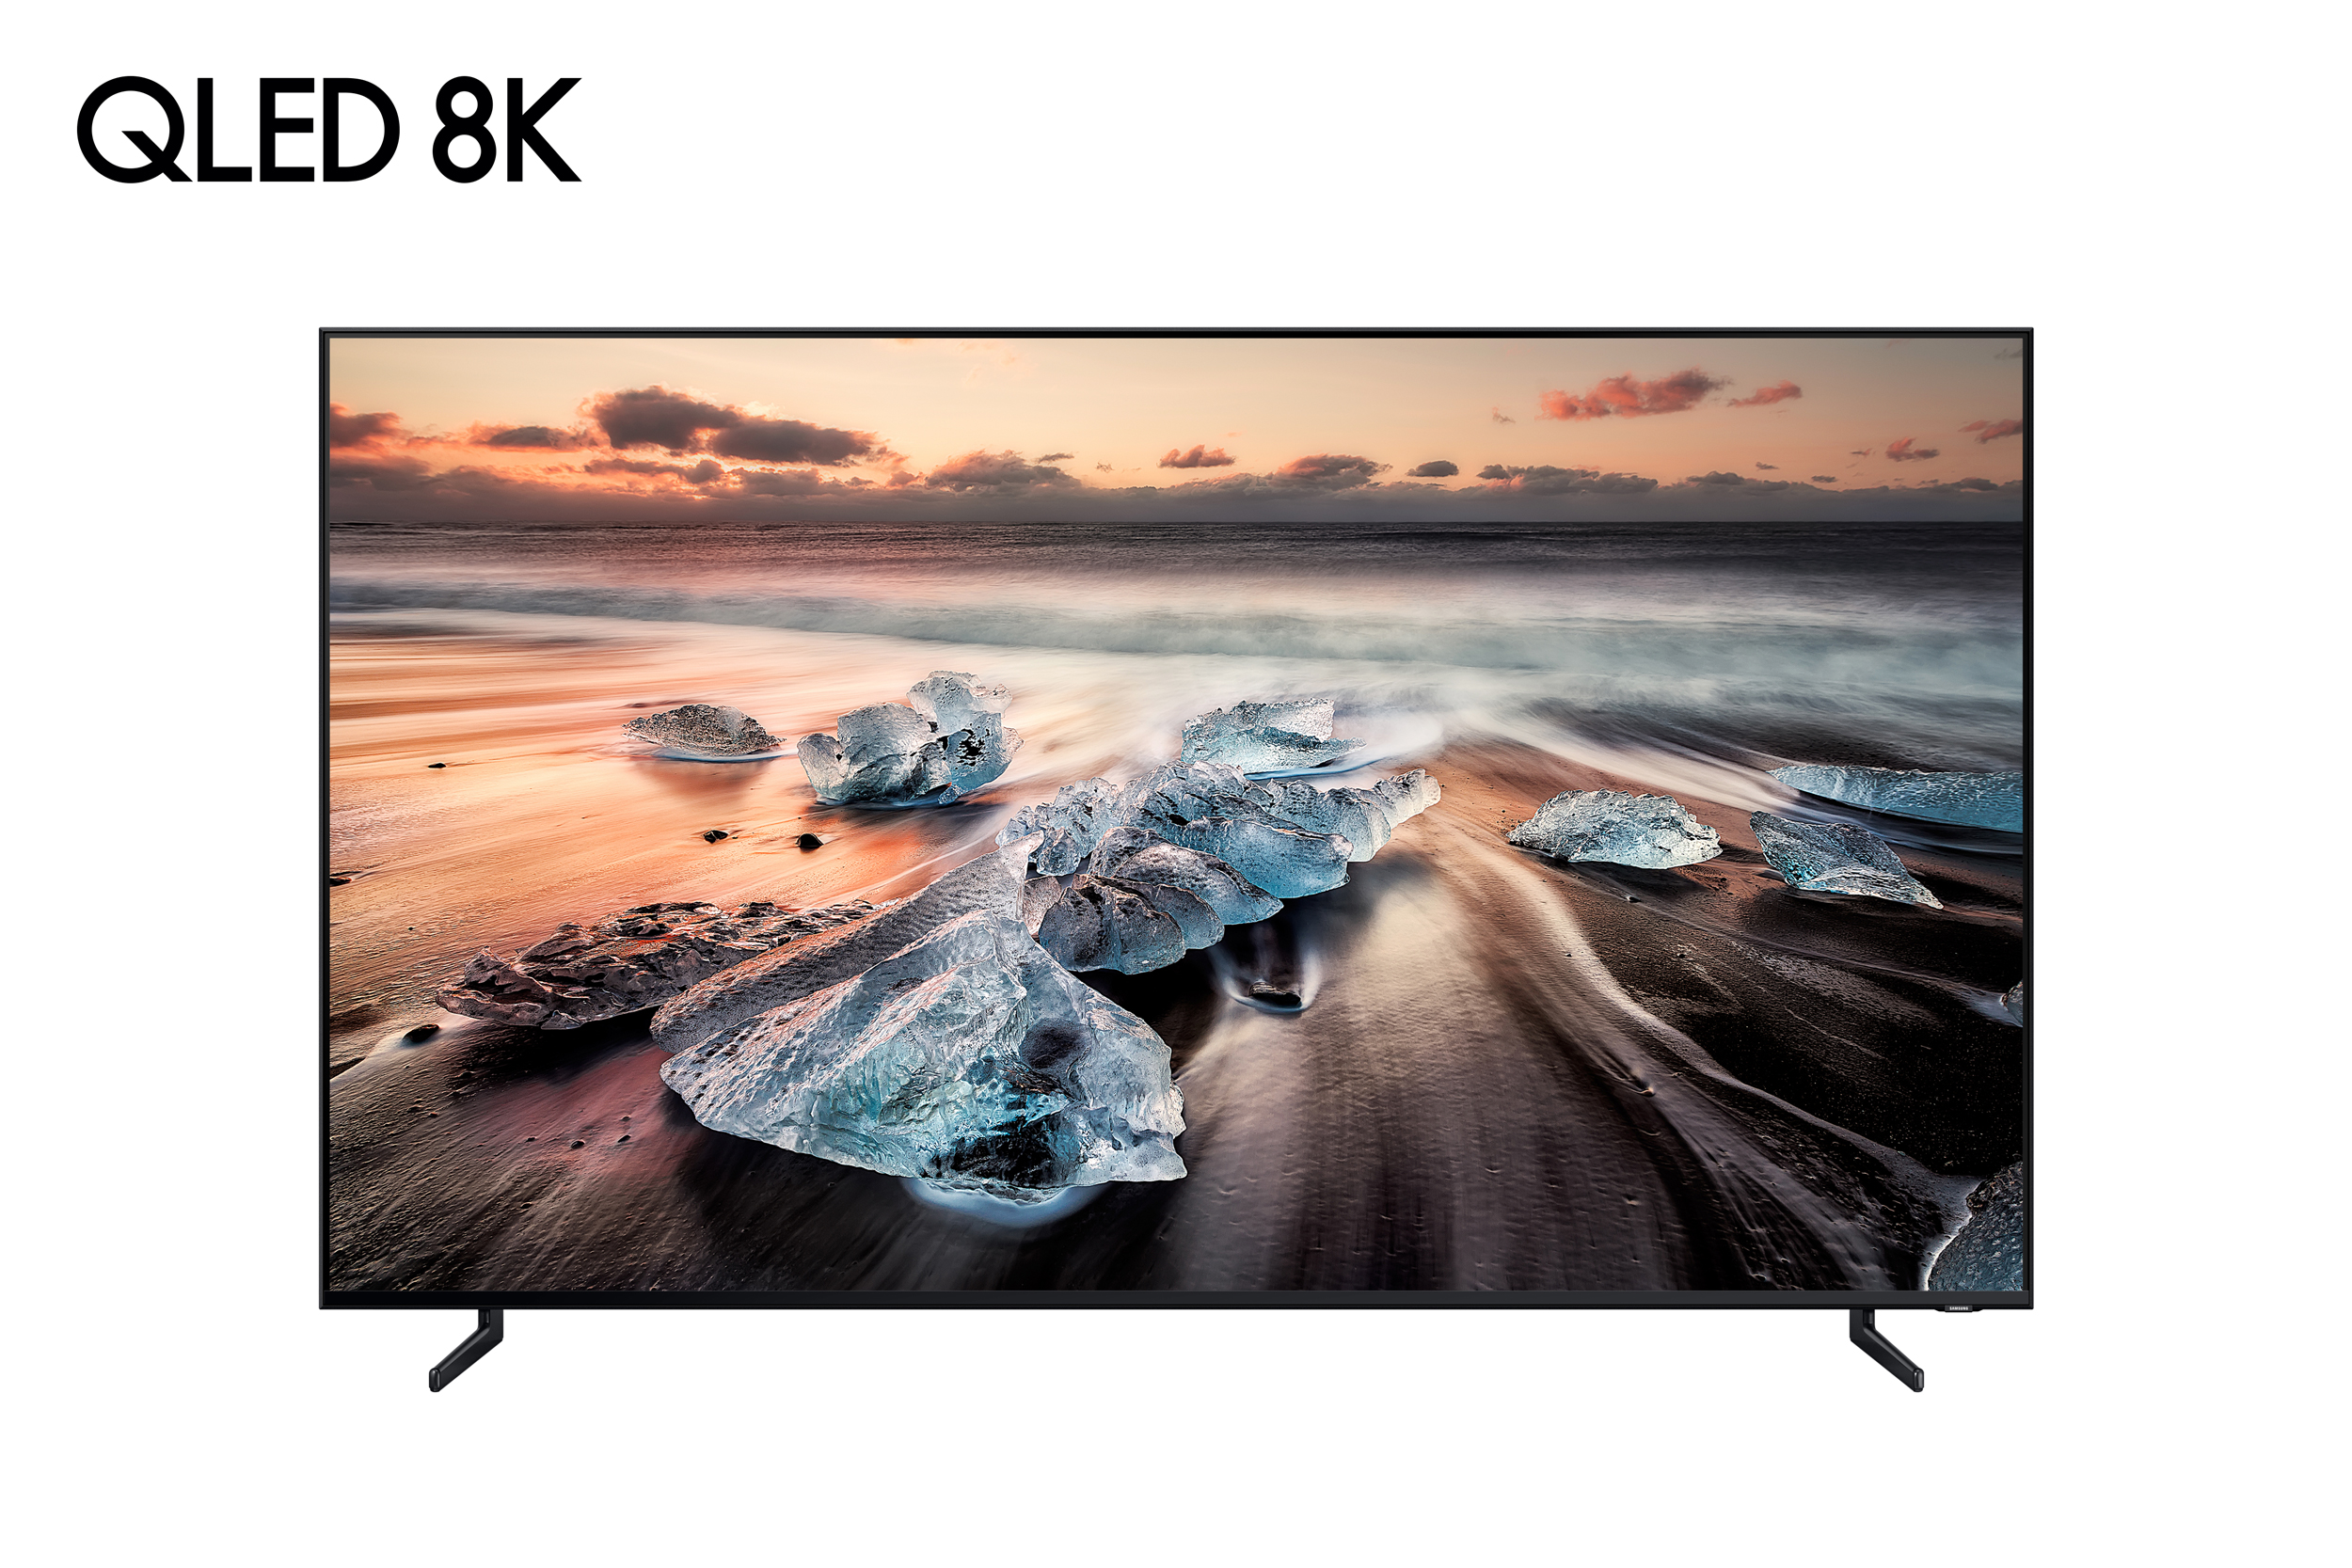 Samsung-QLED-8K-TV-01